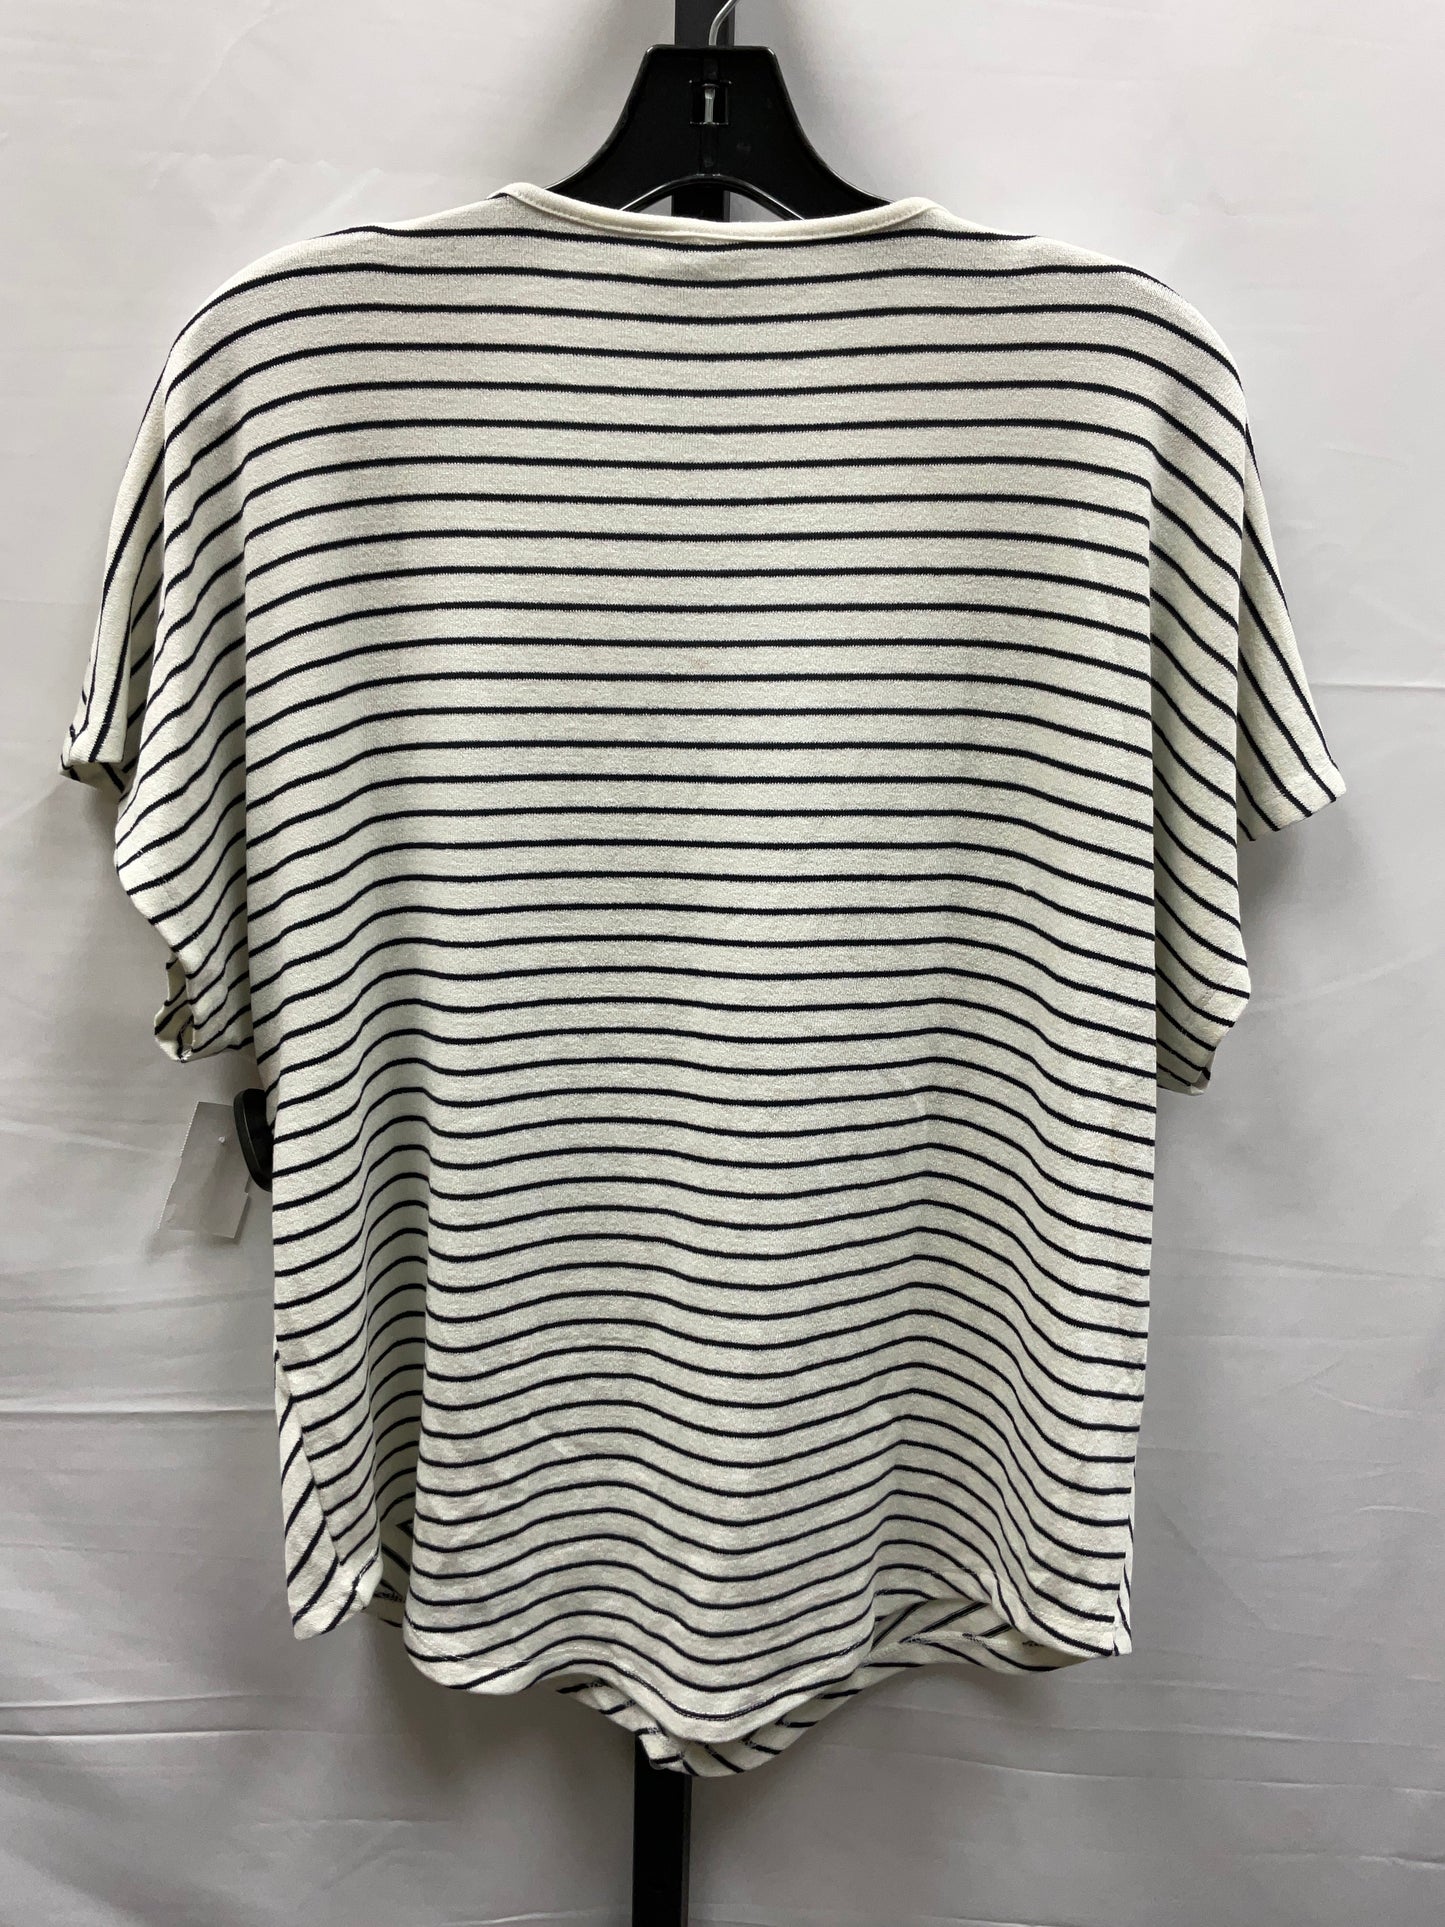 Striped Pattern Top Short Sleeve Gap, Size M